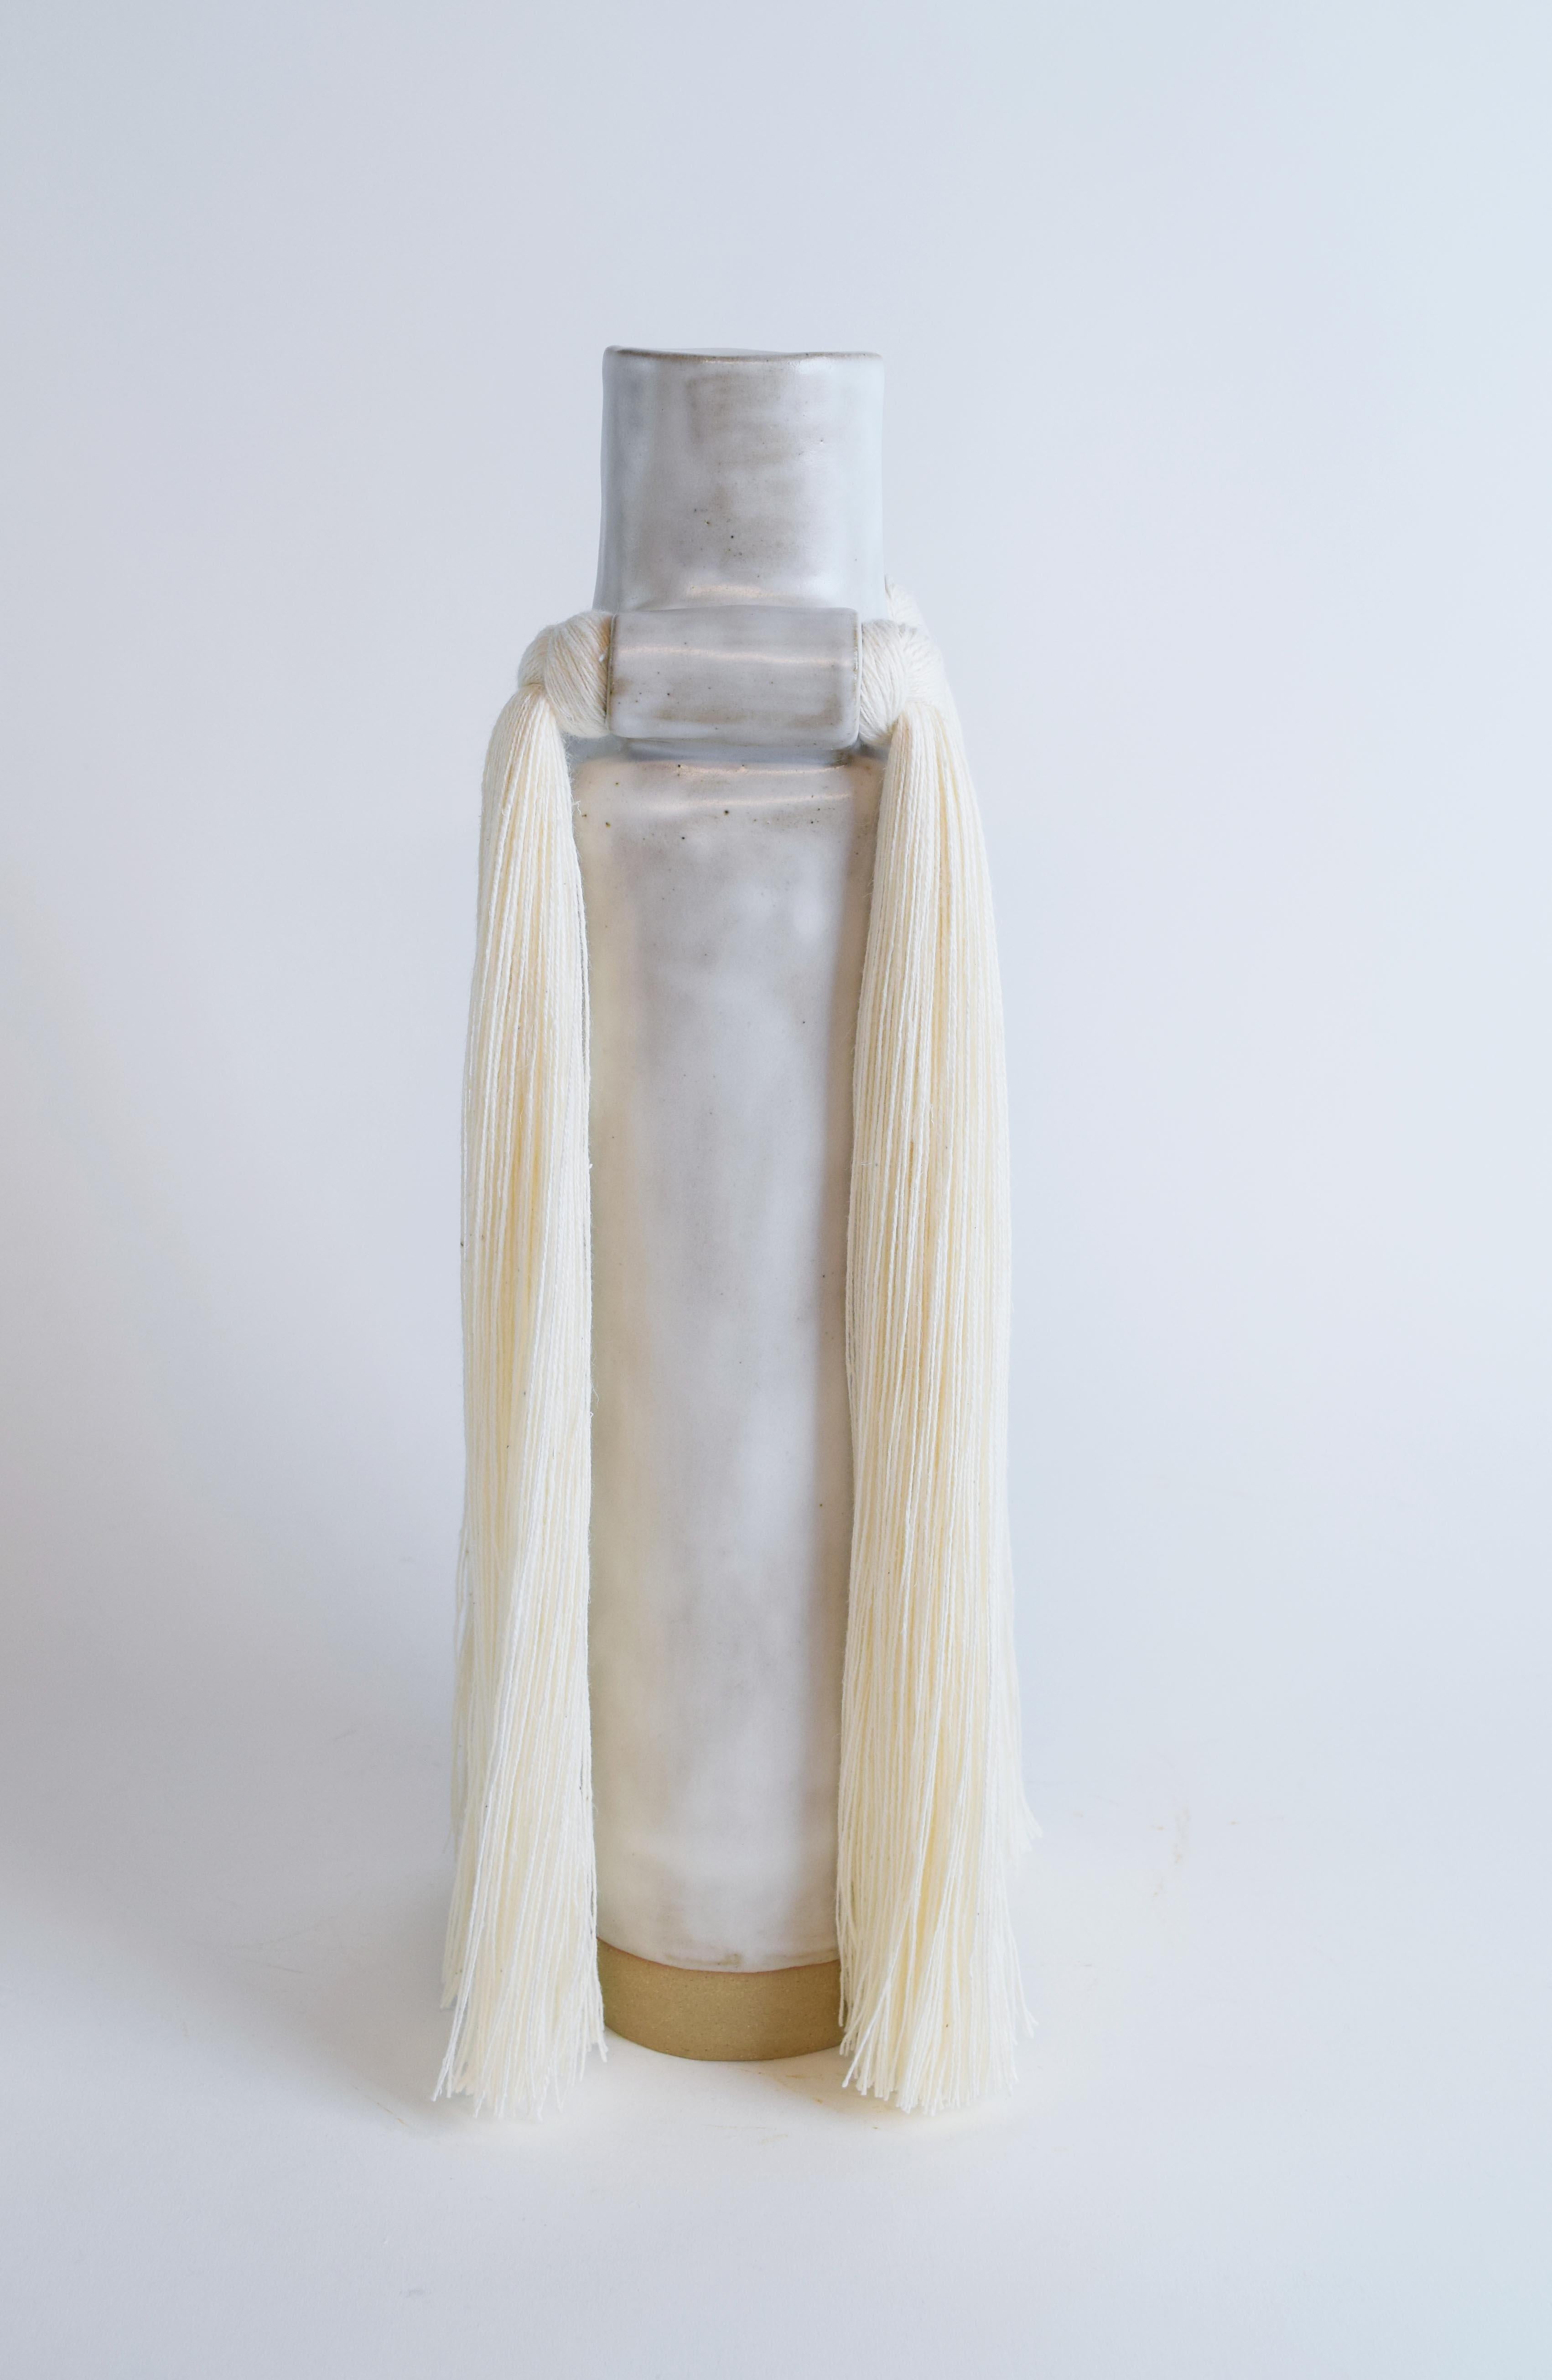 Organic Modern Handmade Ceramic Vase #703 in Satin White Glaze with White Cotton Fringe For Sale